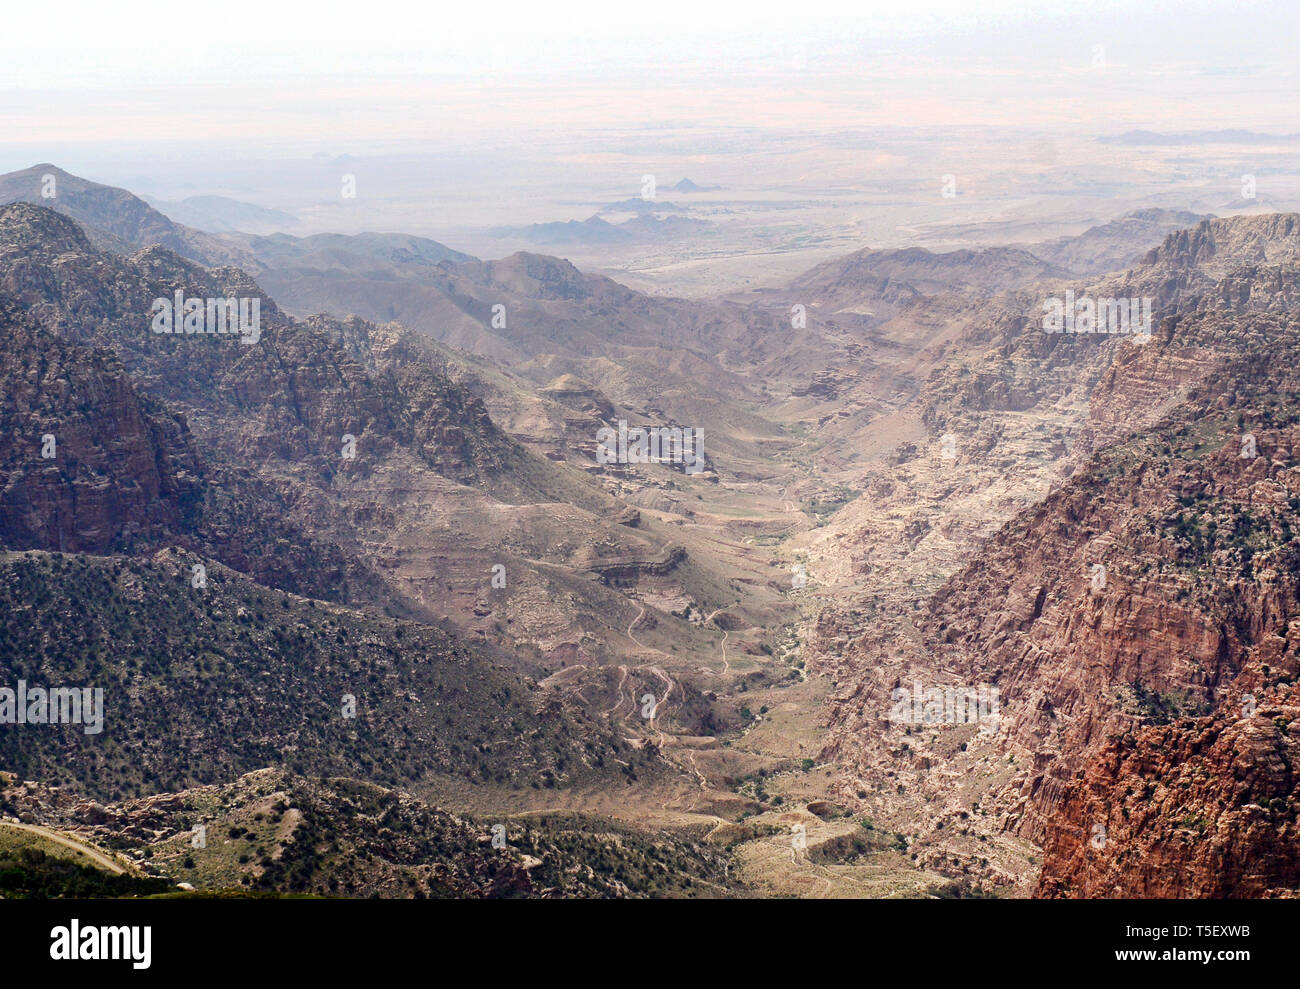 A view of the Dana Biosphere Reserve in Jordan Stock Photo - Alamy